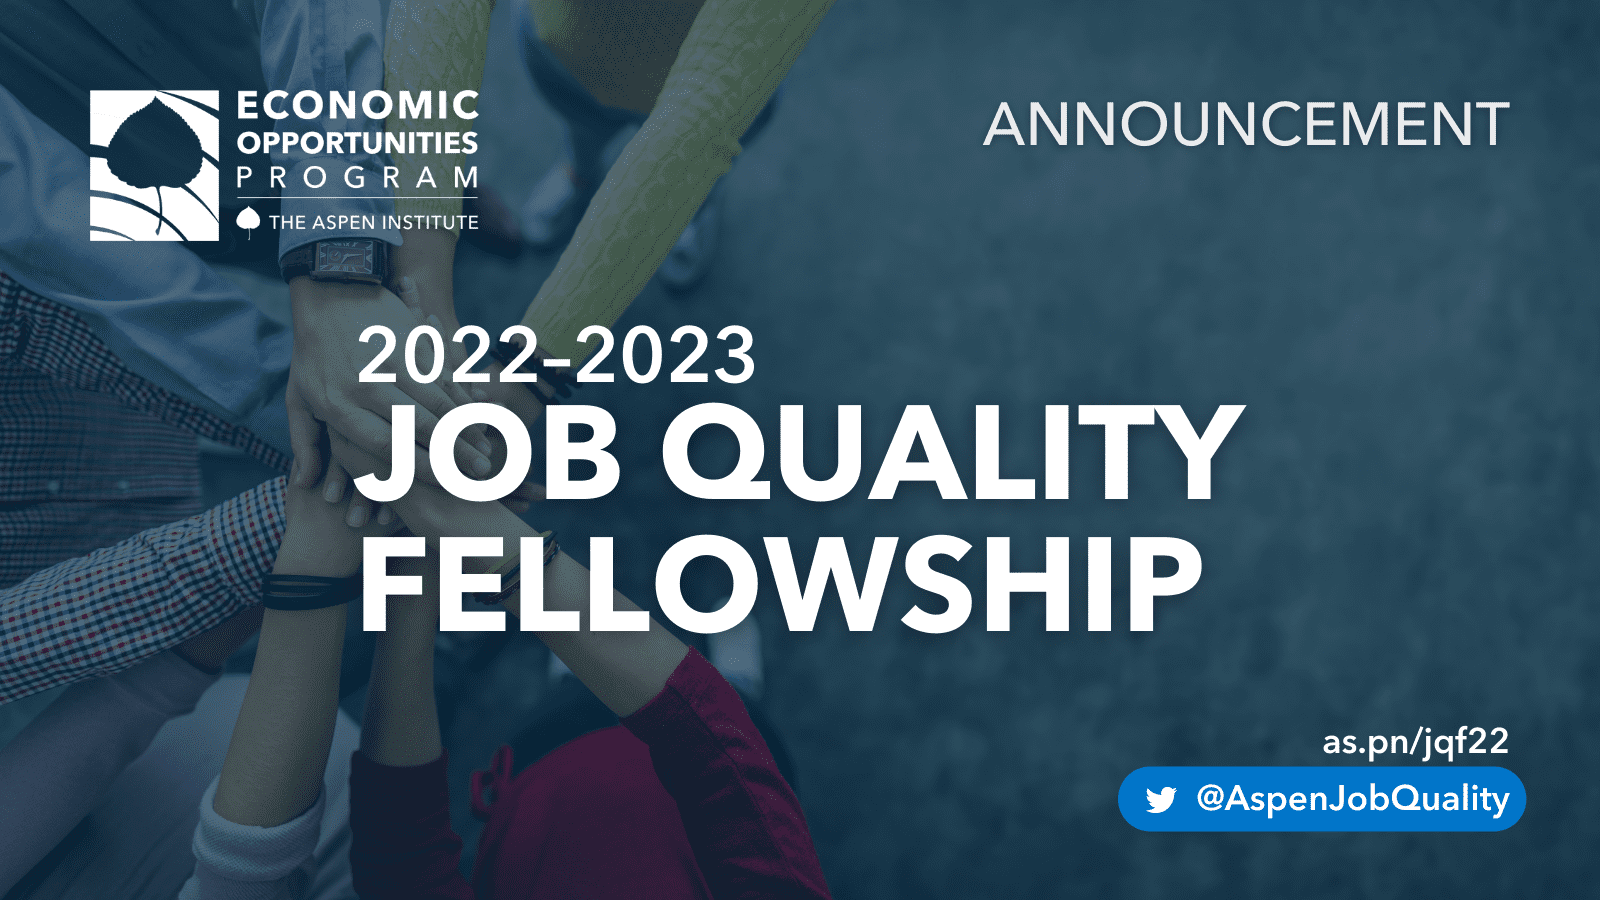 2022-2023 Job Quality Fellowship Announcement